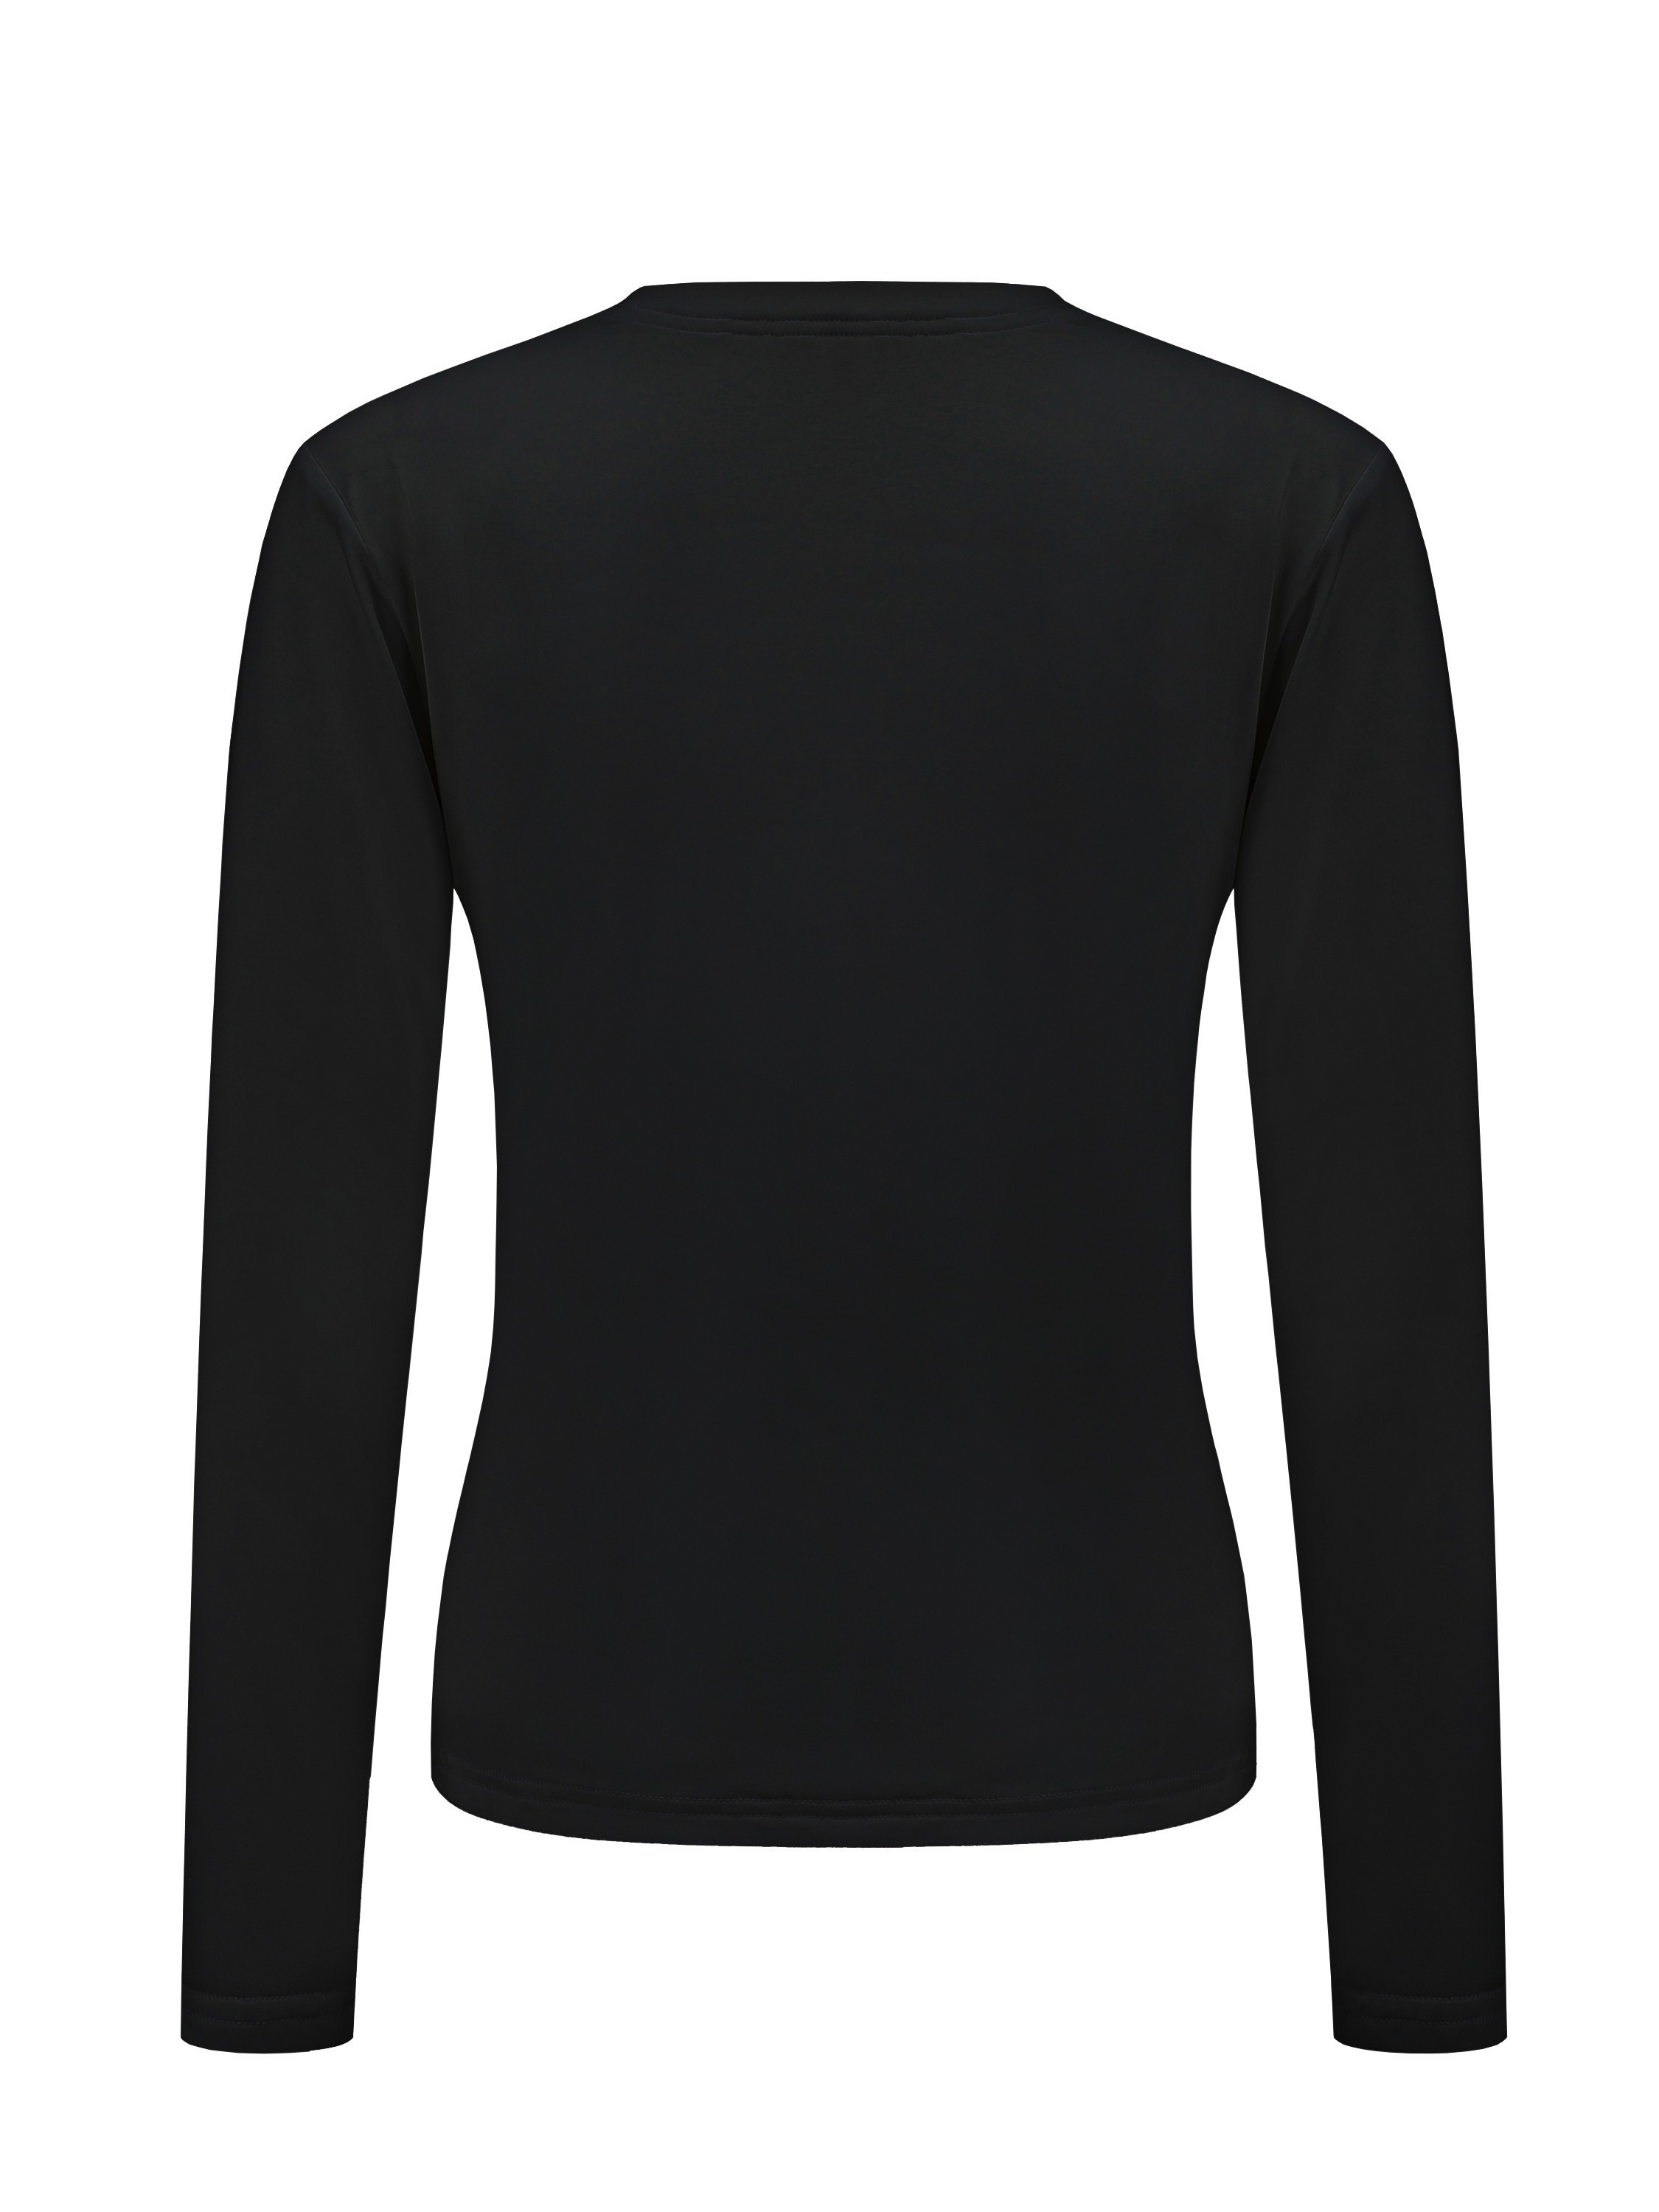 Sanbonepd Women Crew Neck Fleece Lined Thermal Thermal Underwear Slim Tops  Long Sleeve Thermal Shirts Winter Tops 